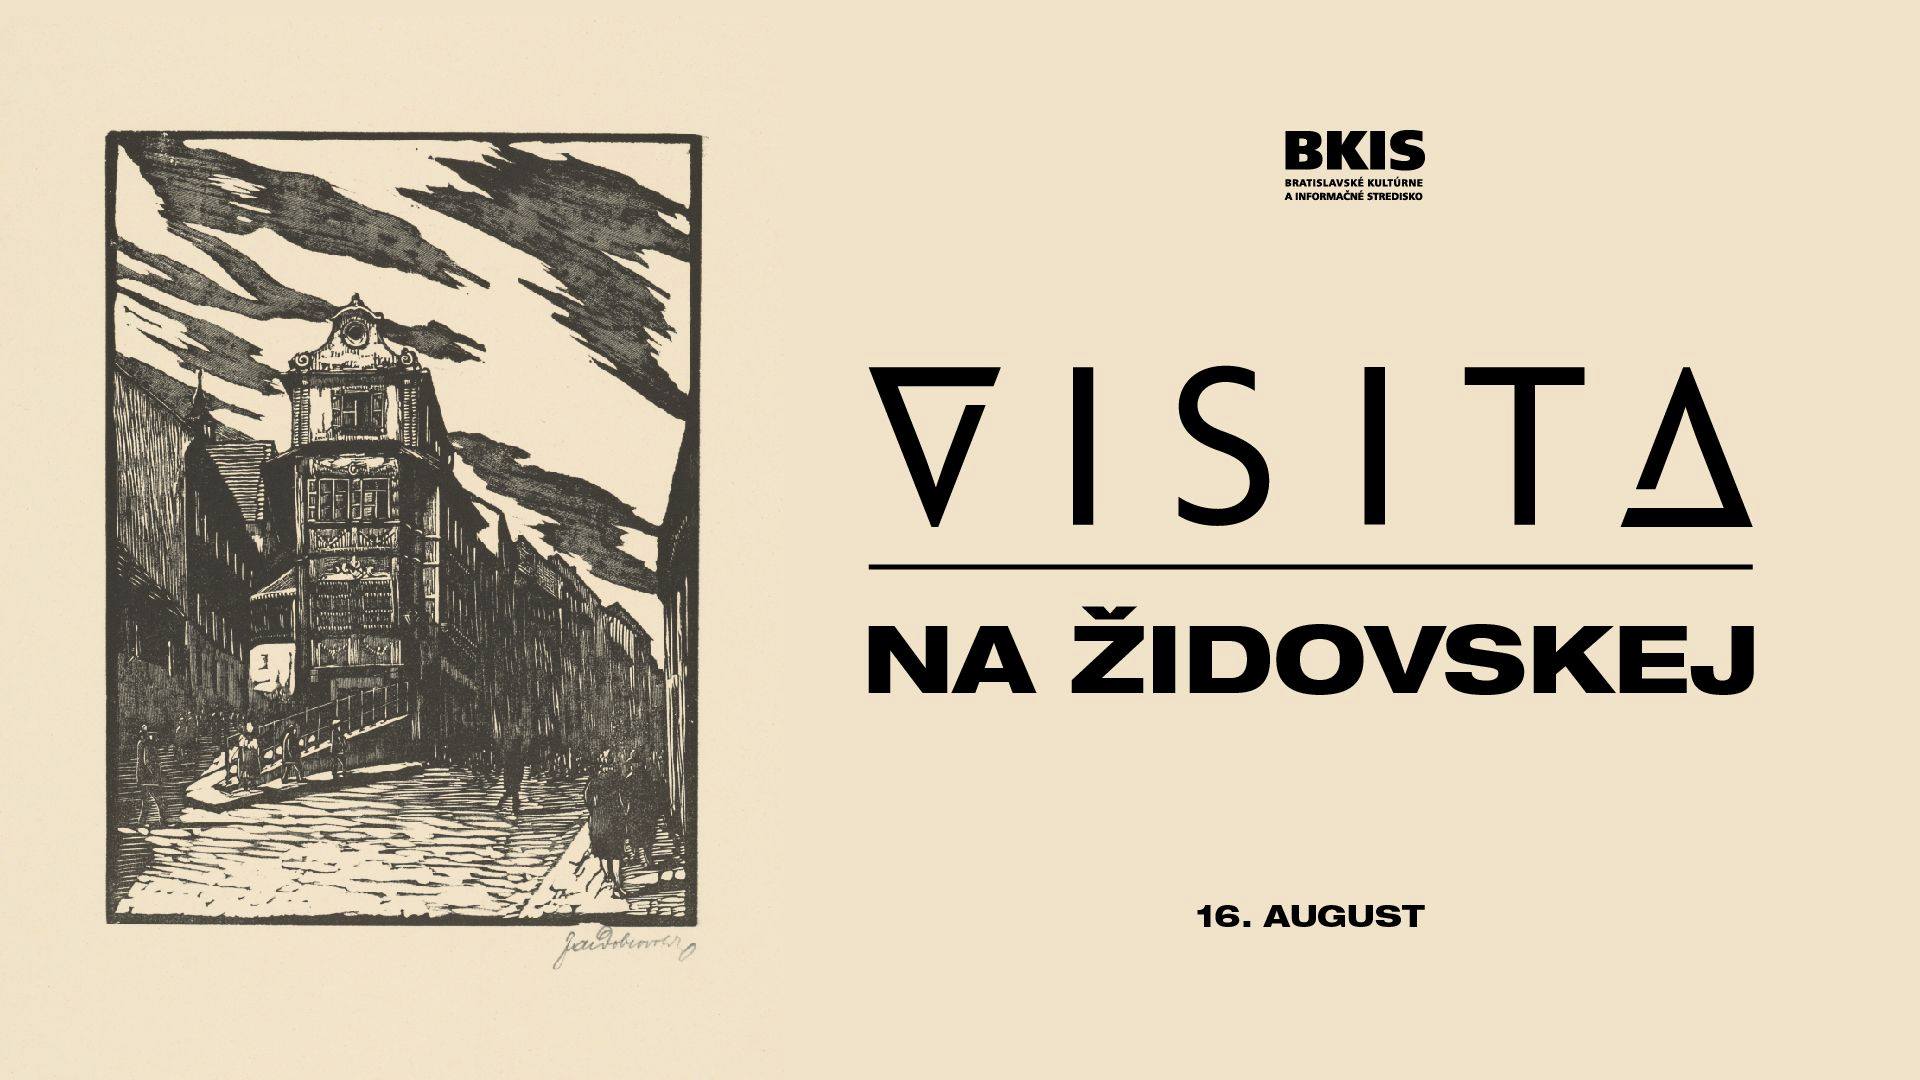 NOV - - - Visita na idovskej Bratislava 2020